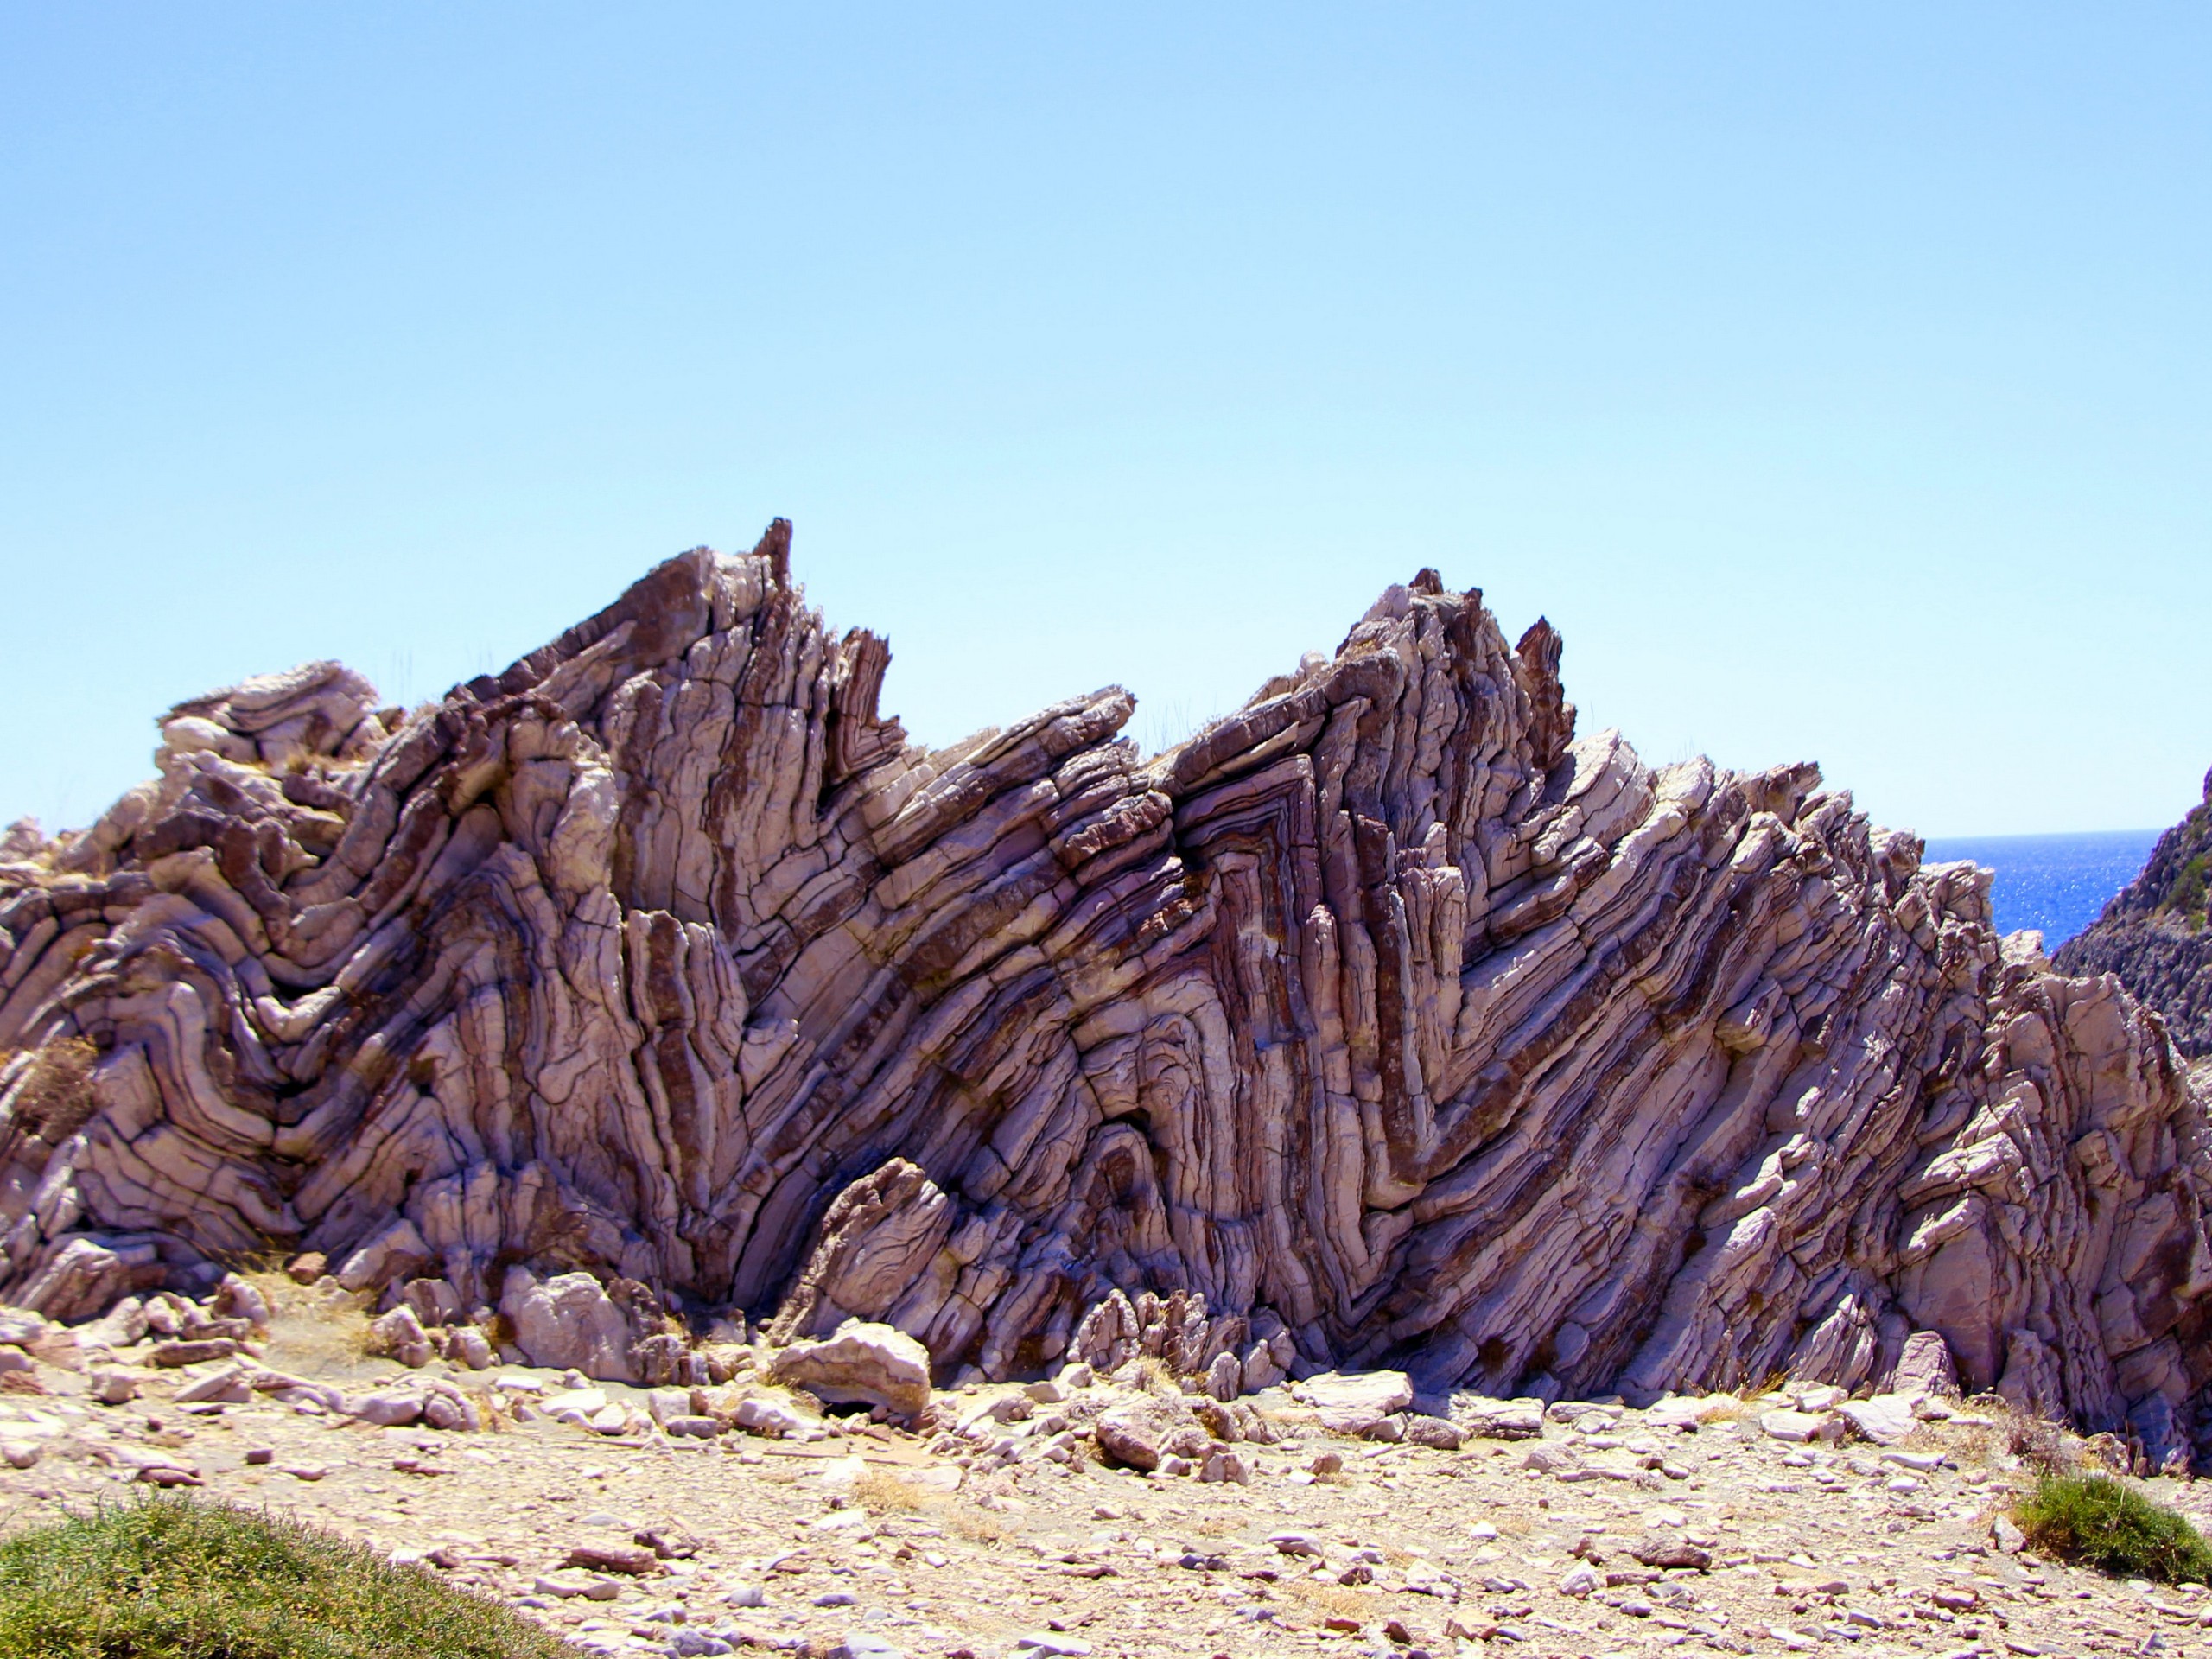 Rock formations in Crete, Greece